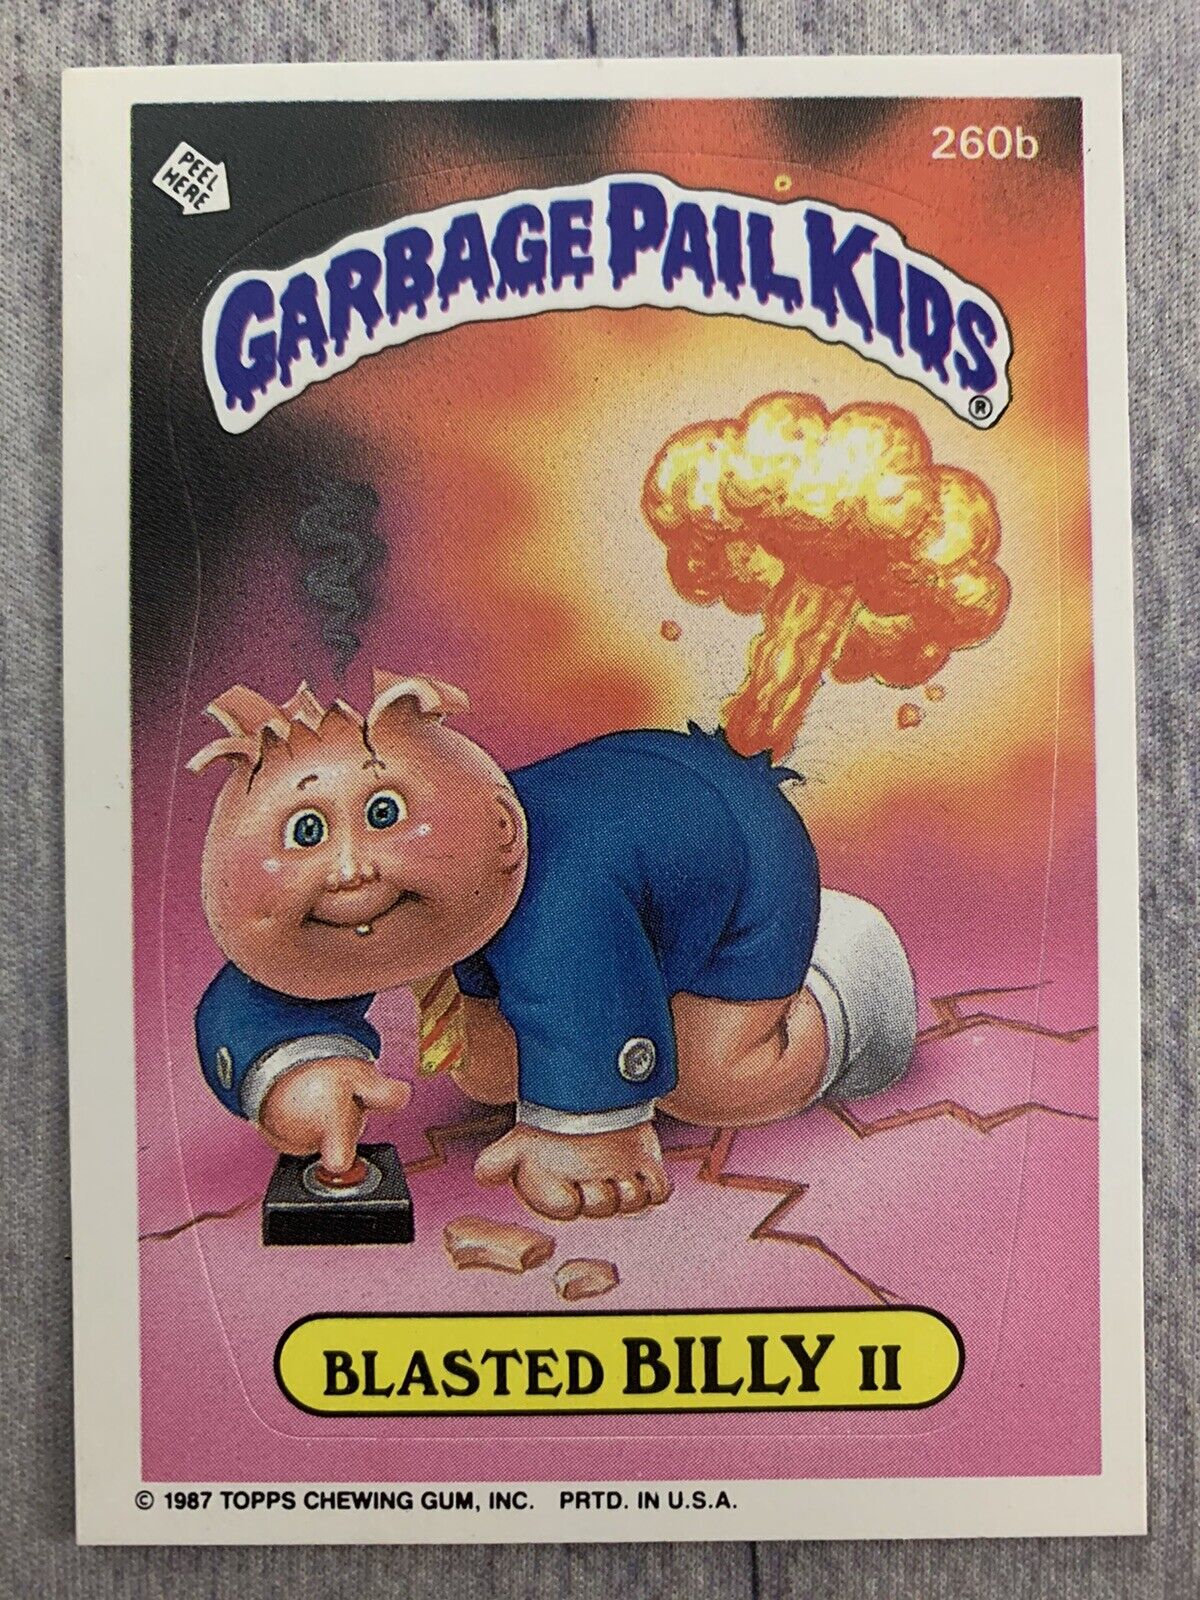 1987 Garbage Pail Kids Blasted Billy II 260b Rare PURPLE BANNER Error